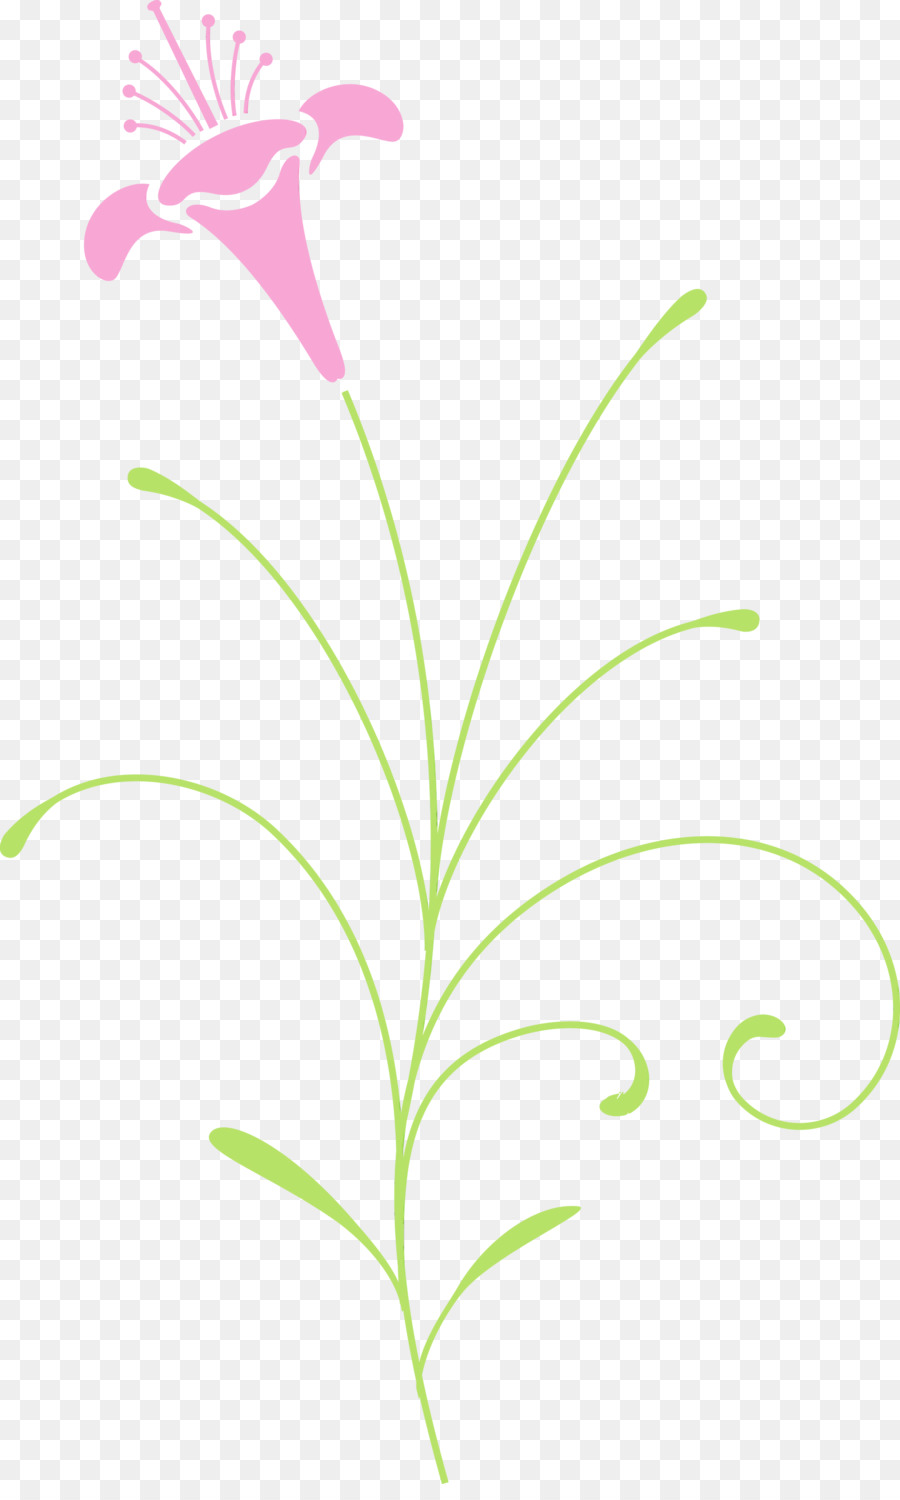 leaf flower plant plant stem pedicel